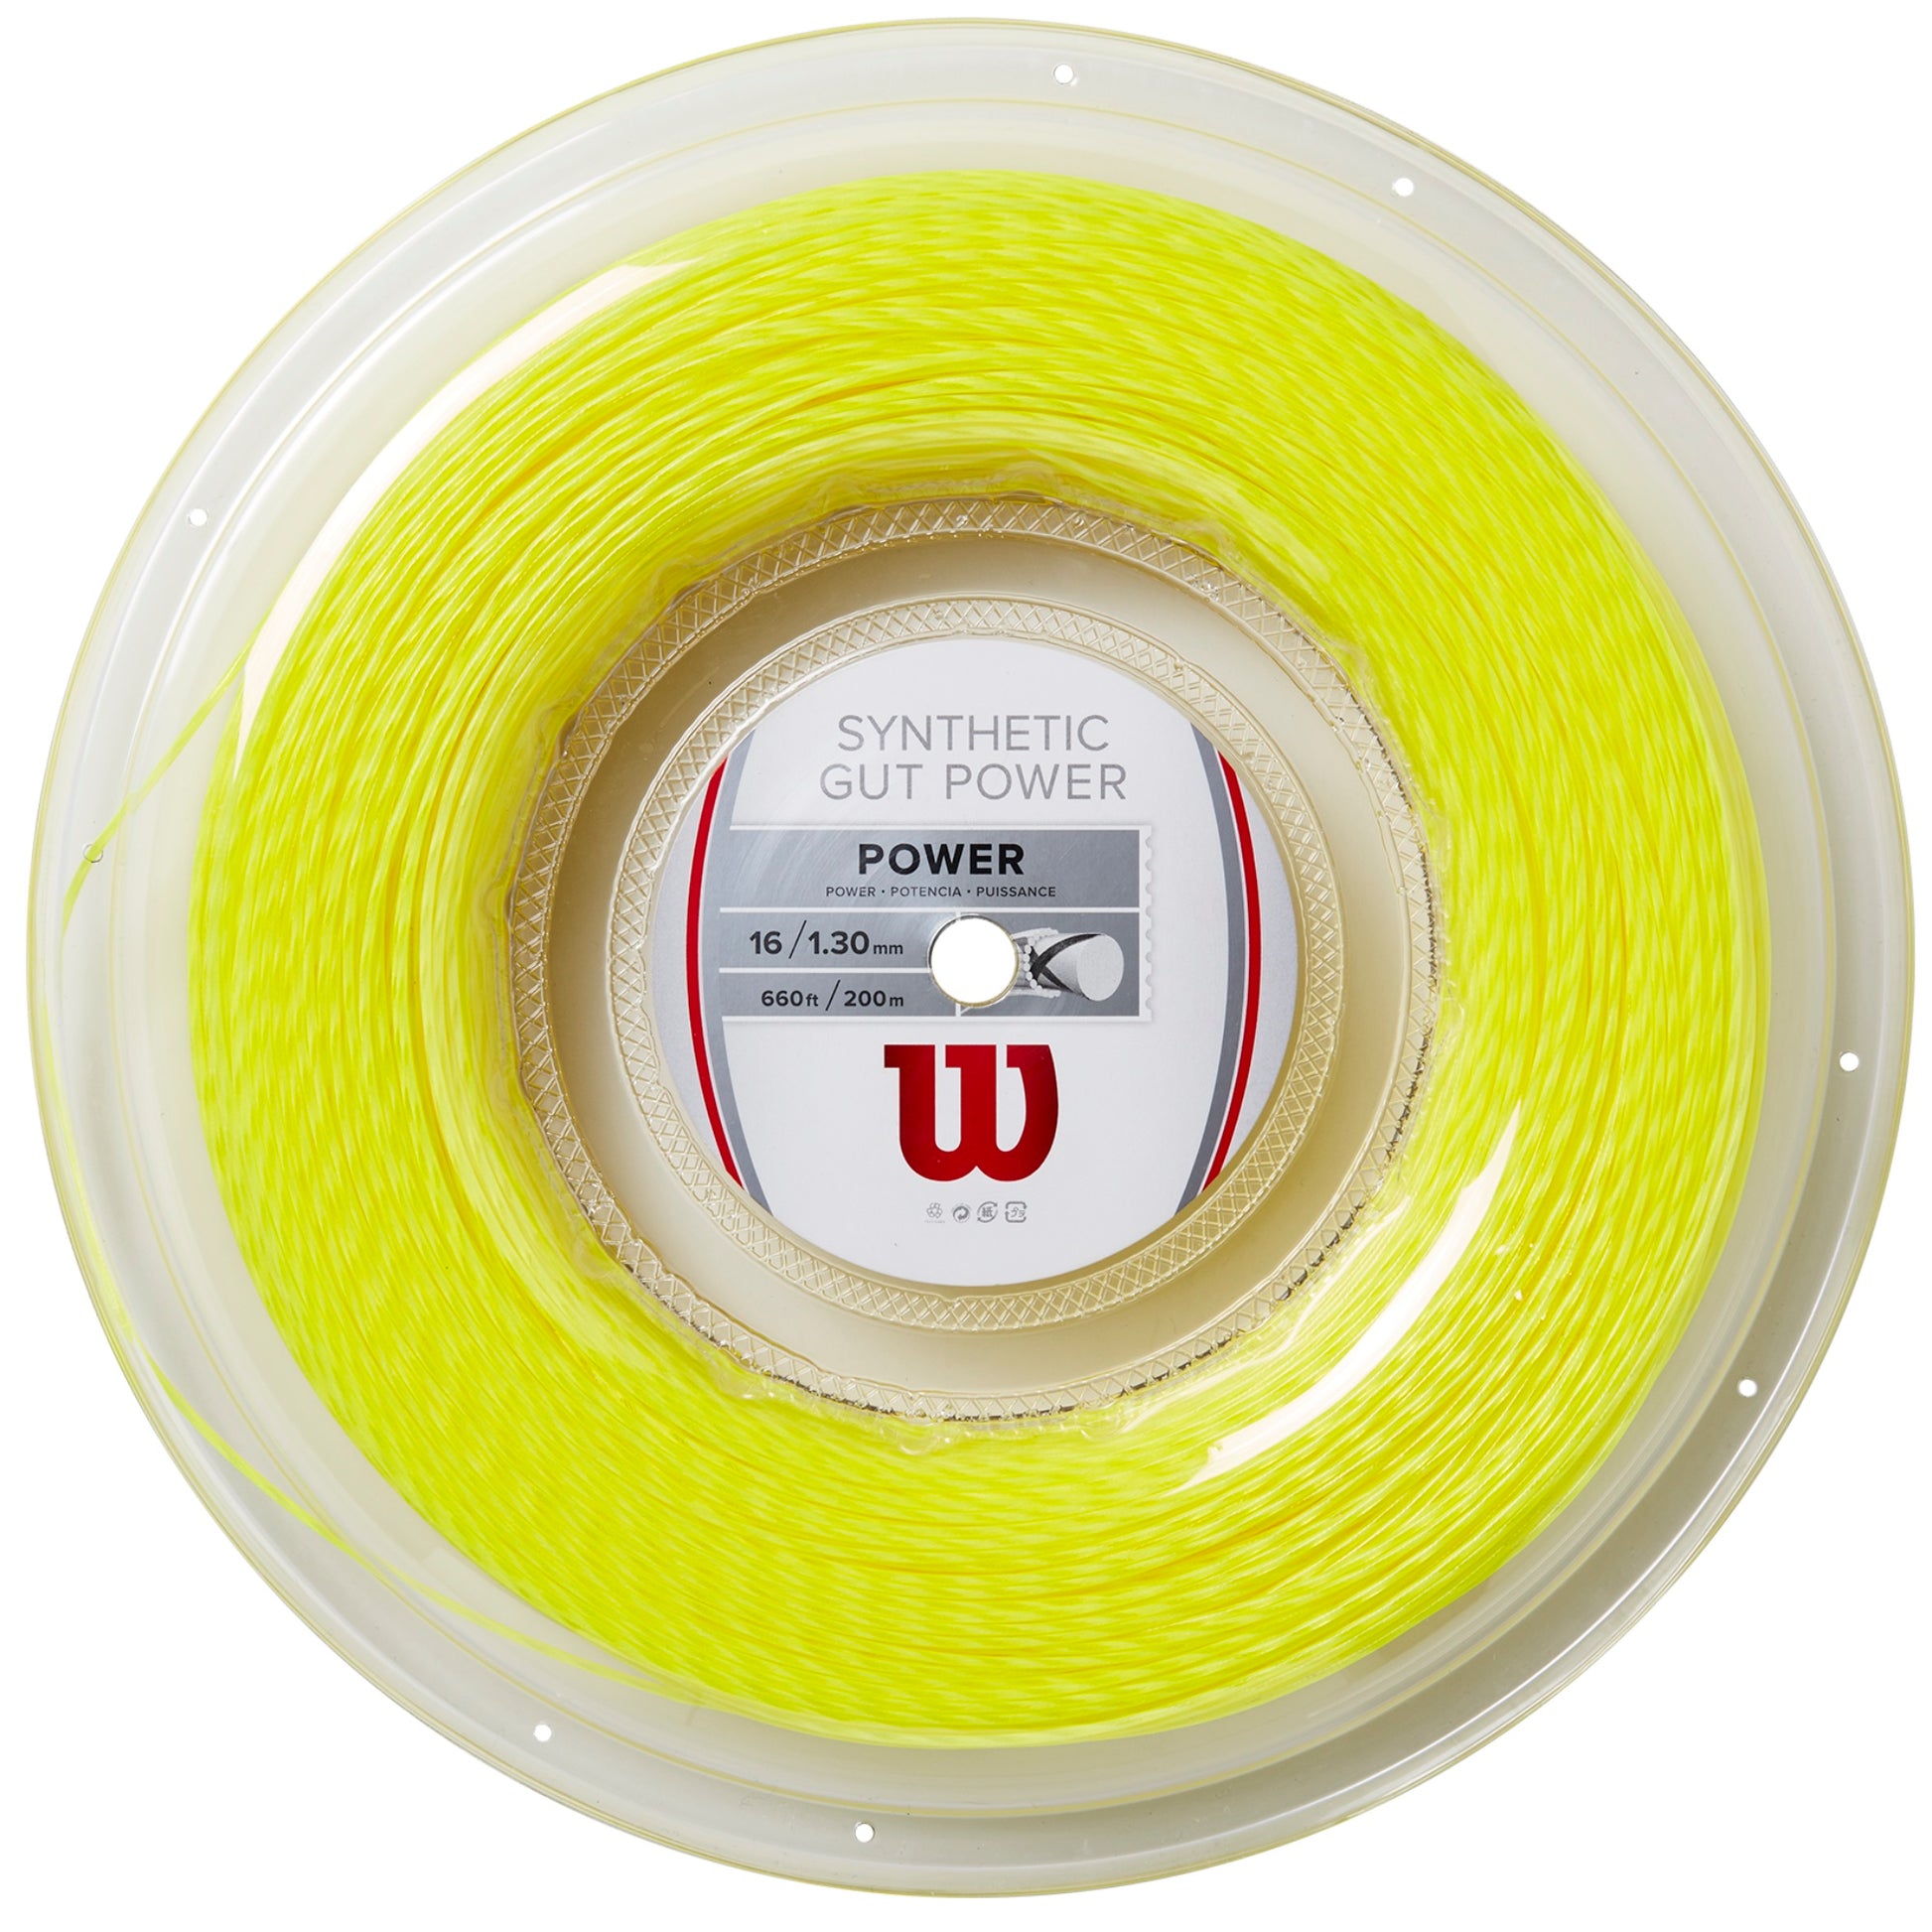 Wilson Synthetic Gut Power 17 Tennis String – 200m Reel, White